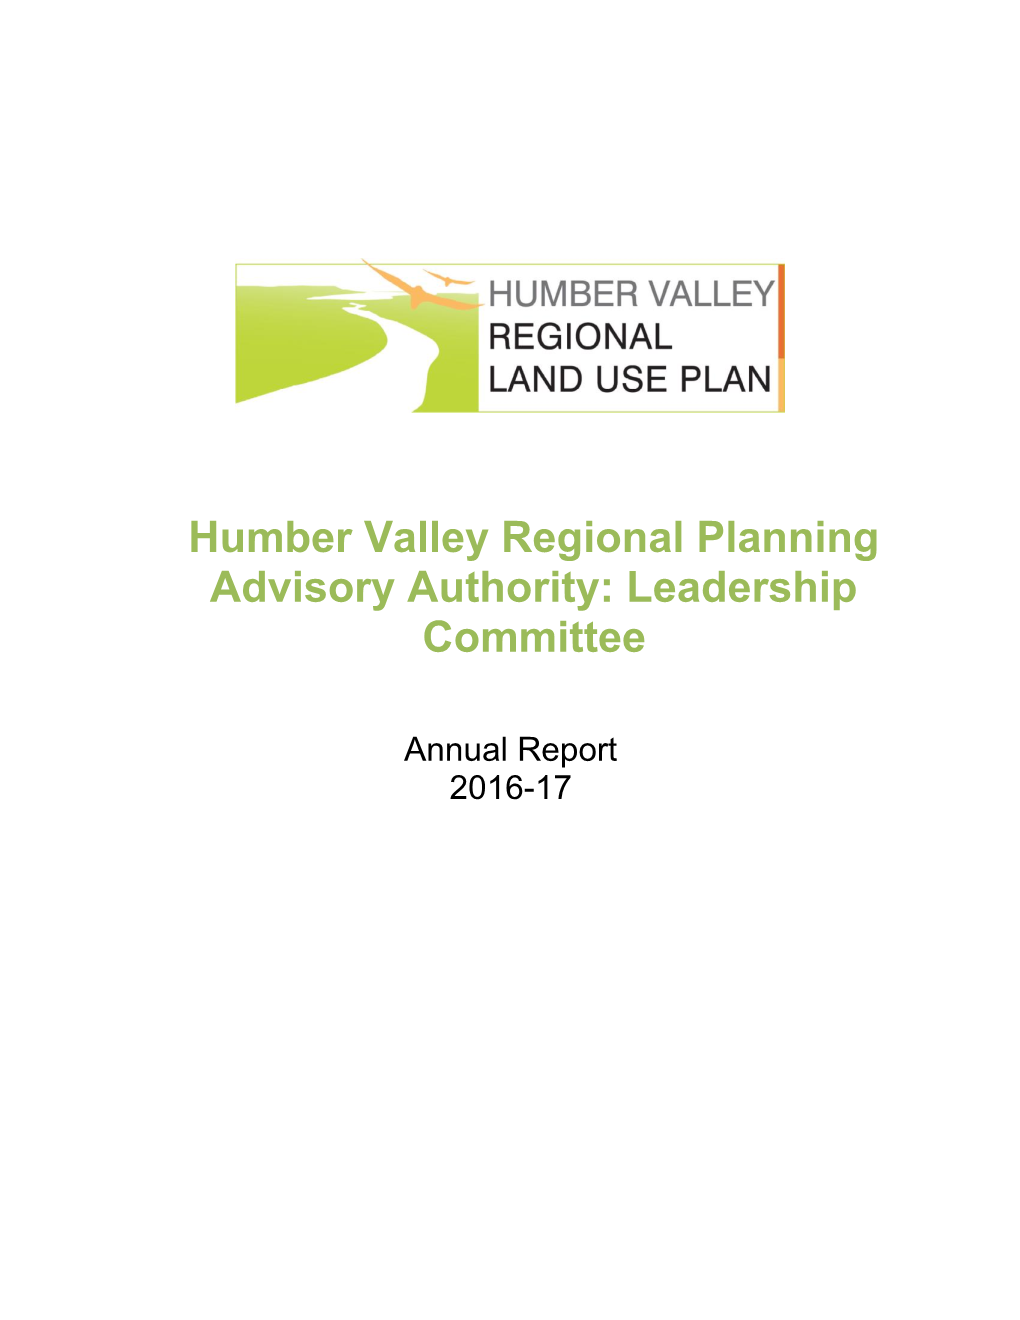 Humber Valley Regional Planning Advisory Authority: Leadership Committee